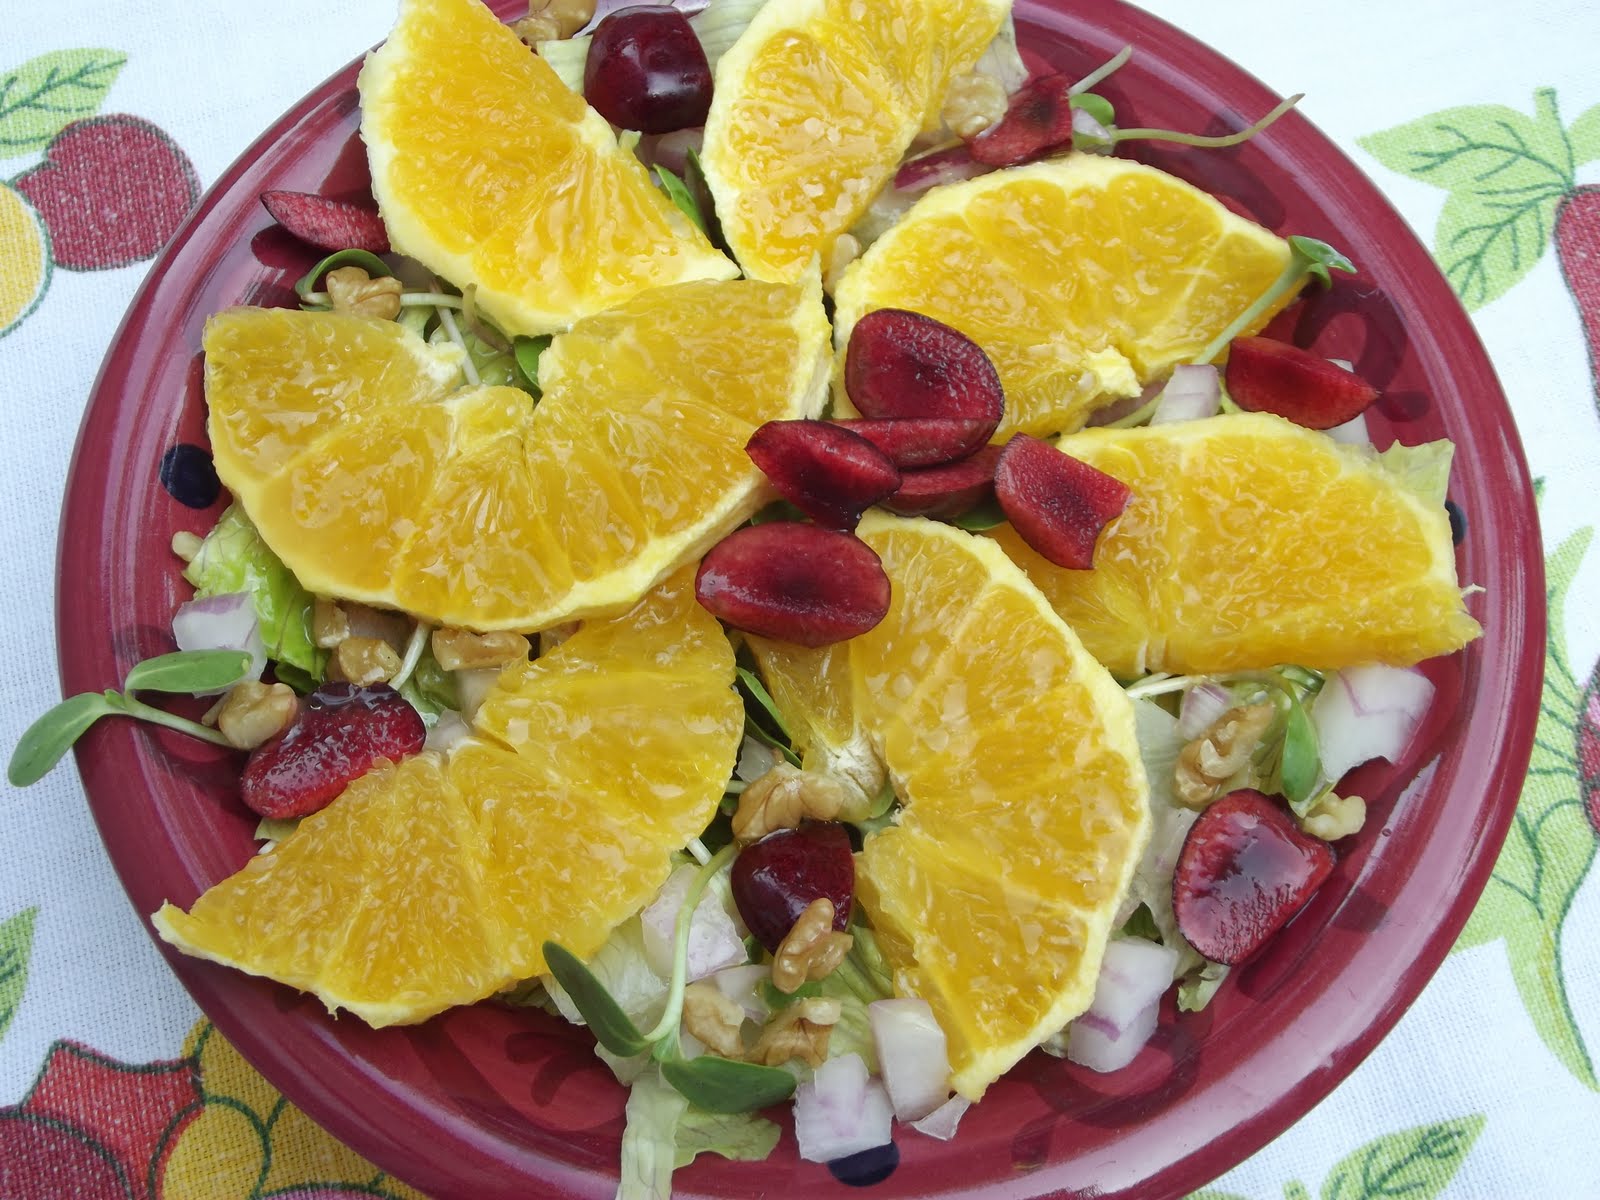 irememberpasta: Sicilian Orange Salad with a Twist